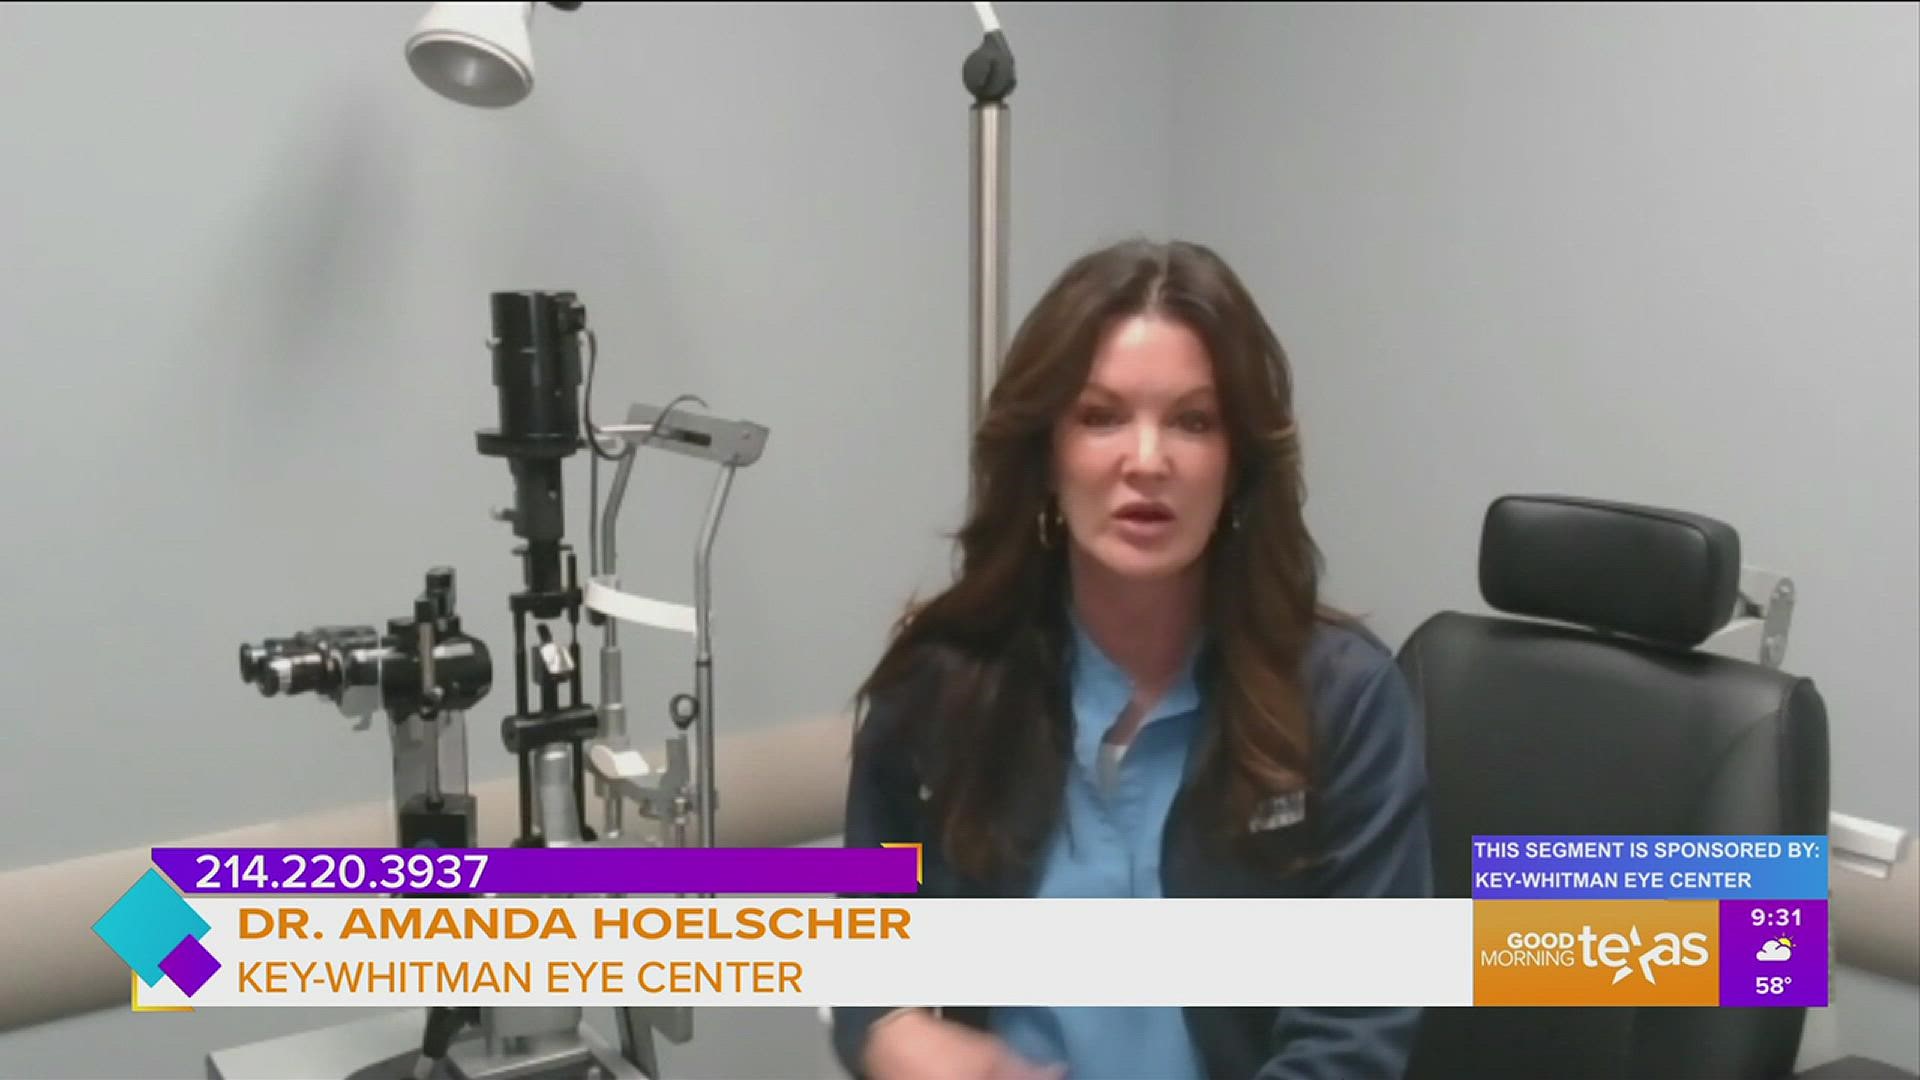 This segment is sponsored by Key-Whitman Eye Center